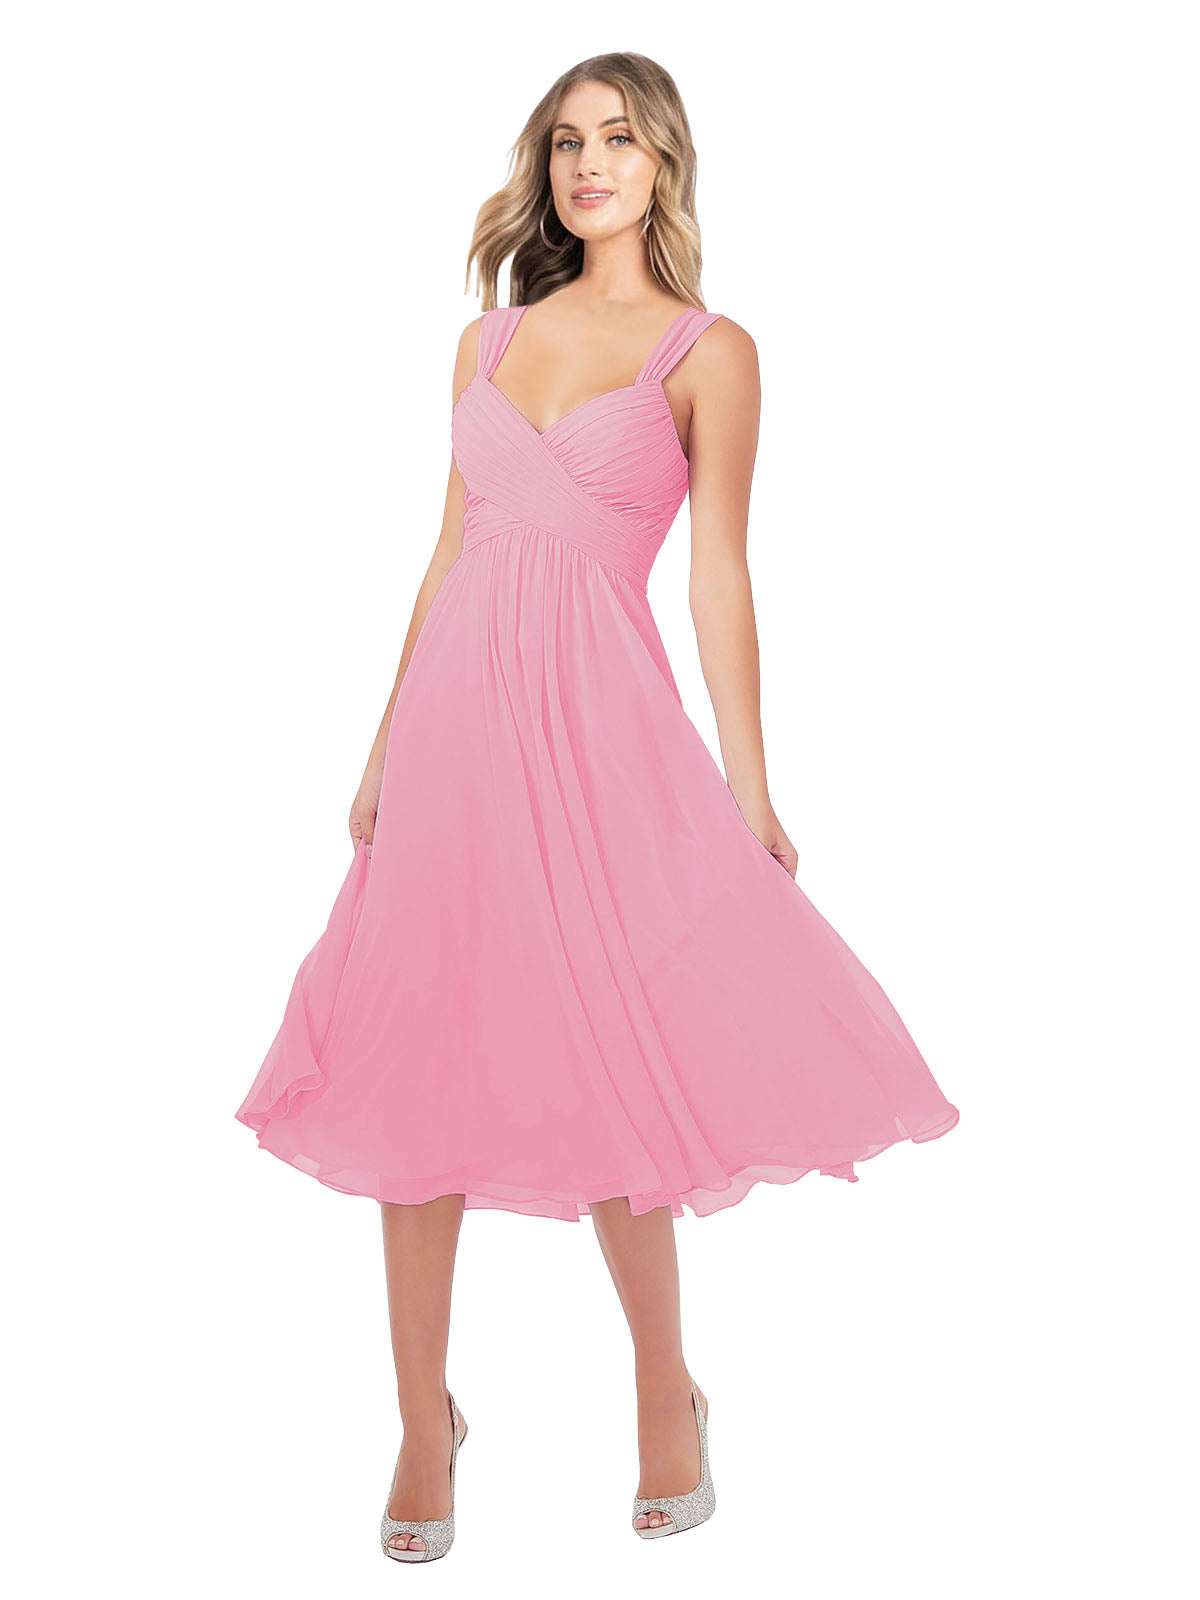 RightBrides Rodney Hot Pink A-Line Sweetheart Sleeveless Short Bridesmaid Dress